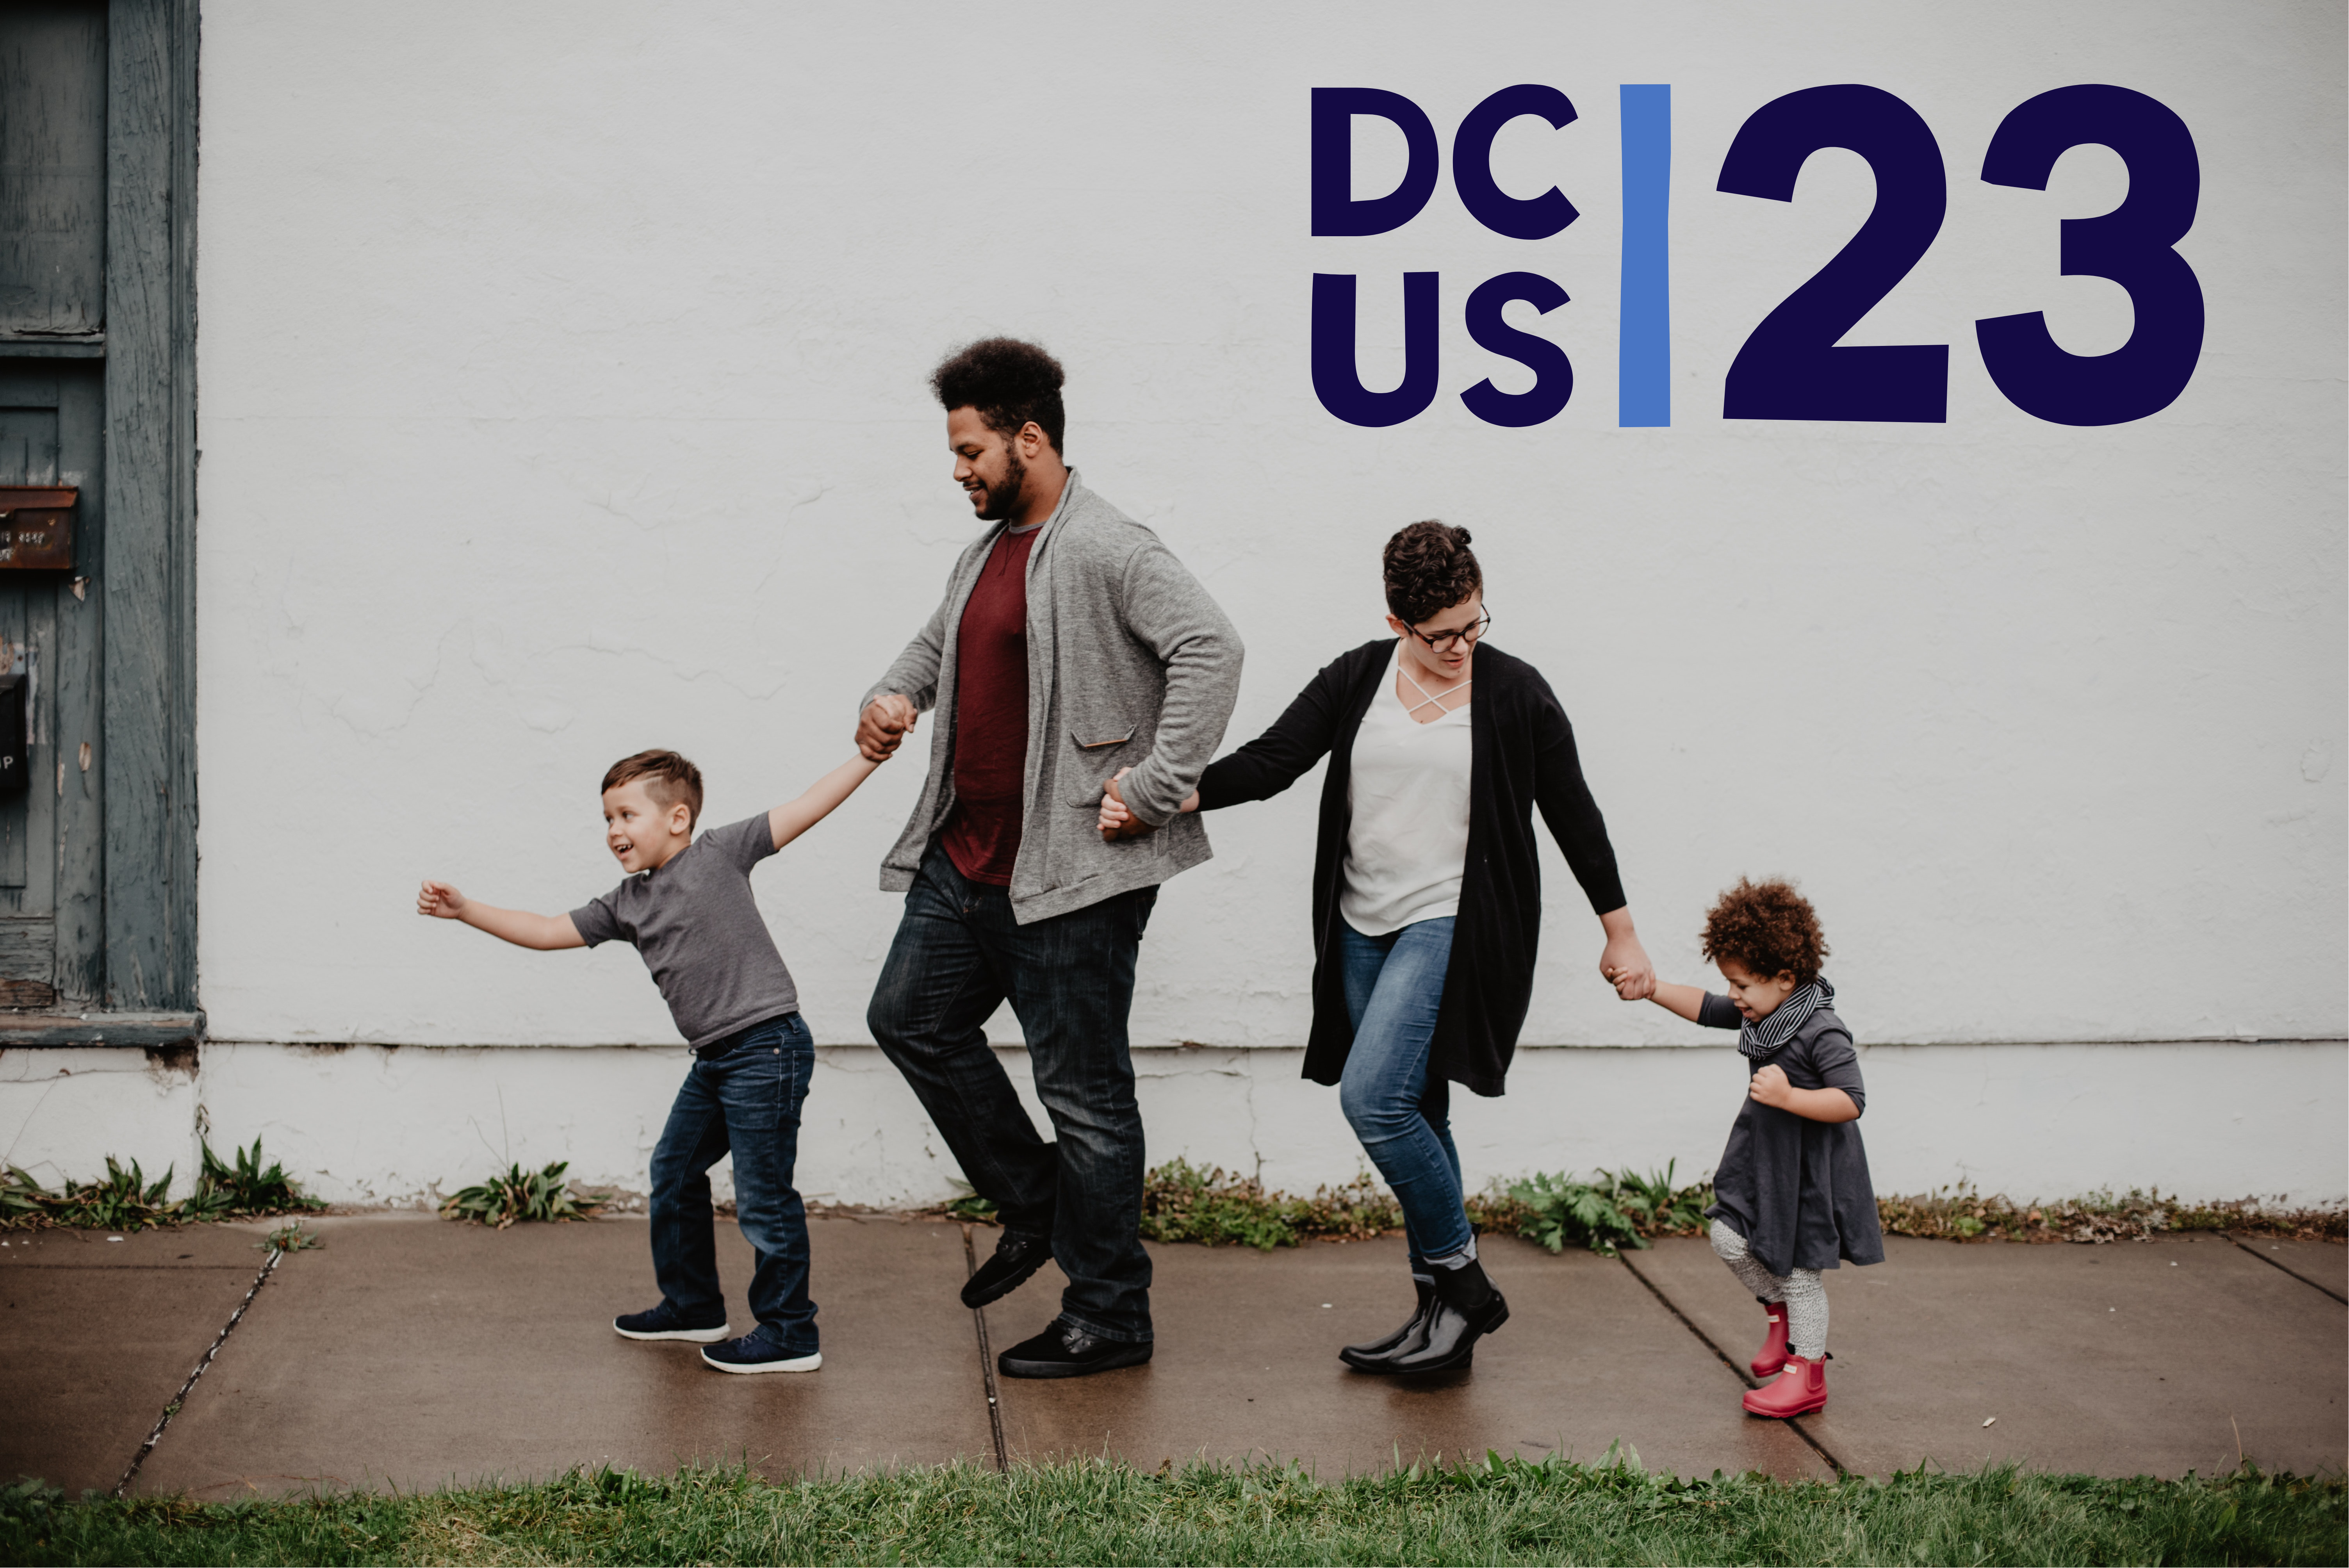 DjangoCon US 2023 Childcare, Lactation, and Family